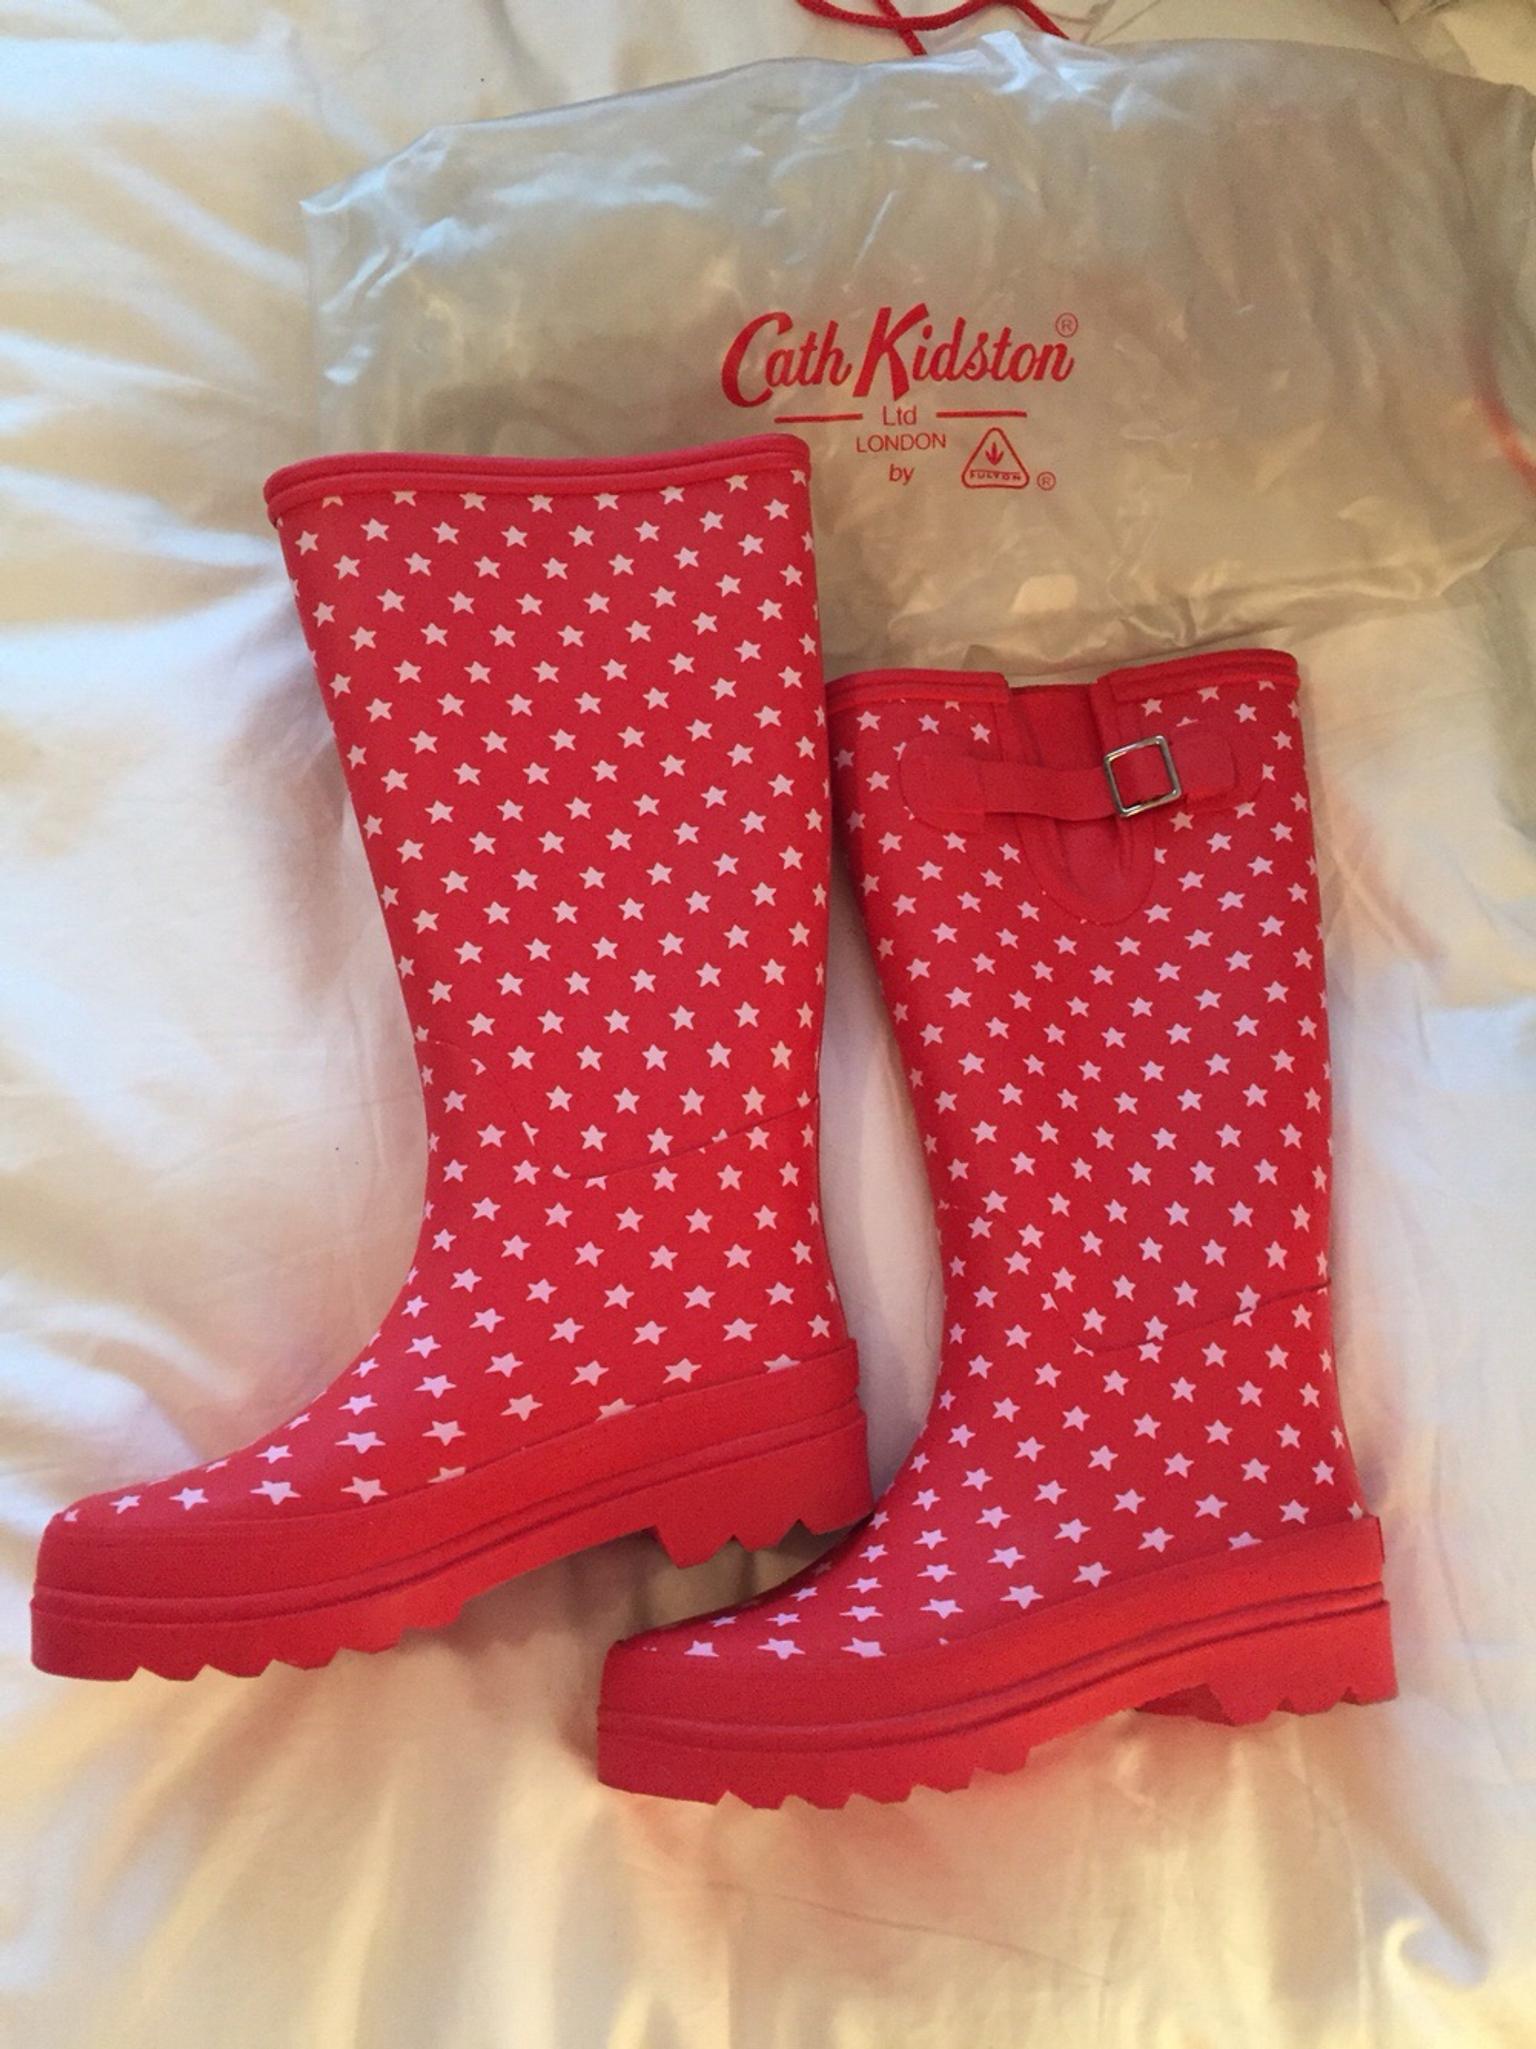 cath kidston wellington boots